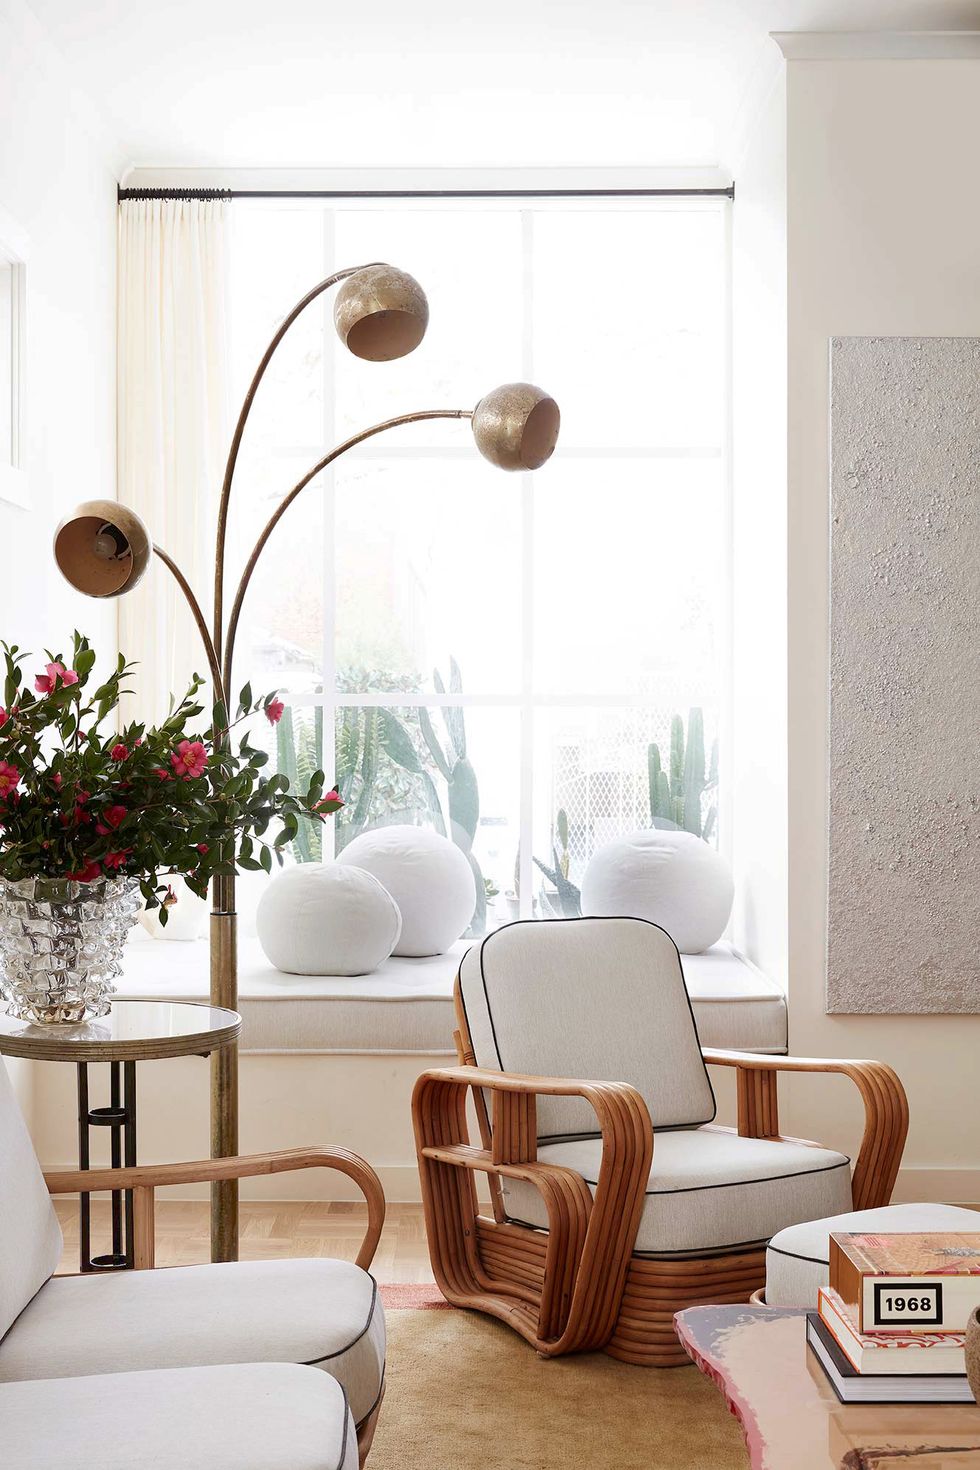 30 Stylish Corner Decoration Ideas - How to Decorate a Corner